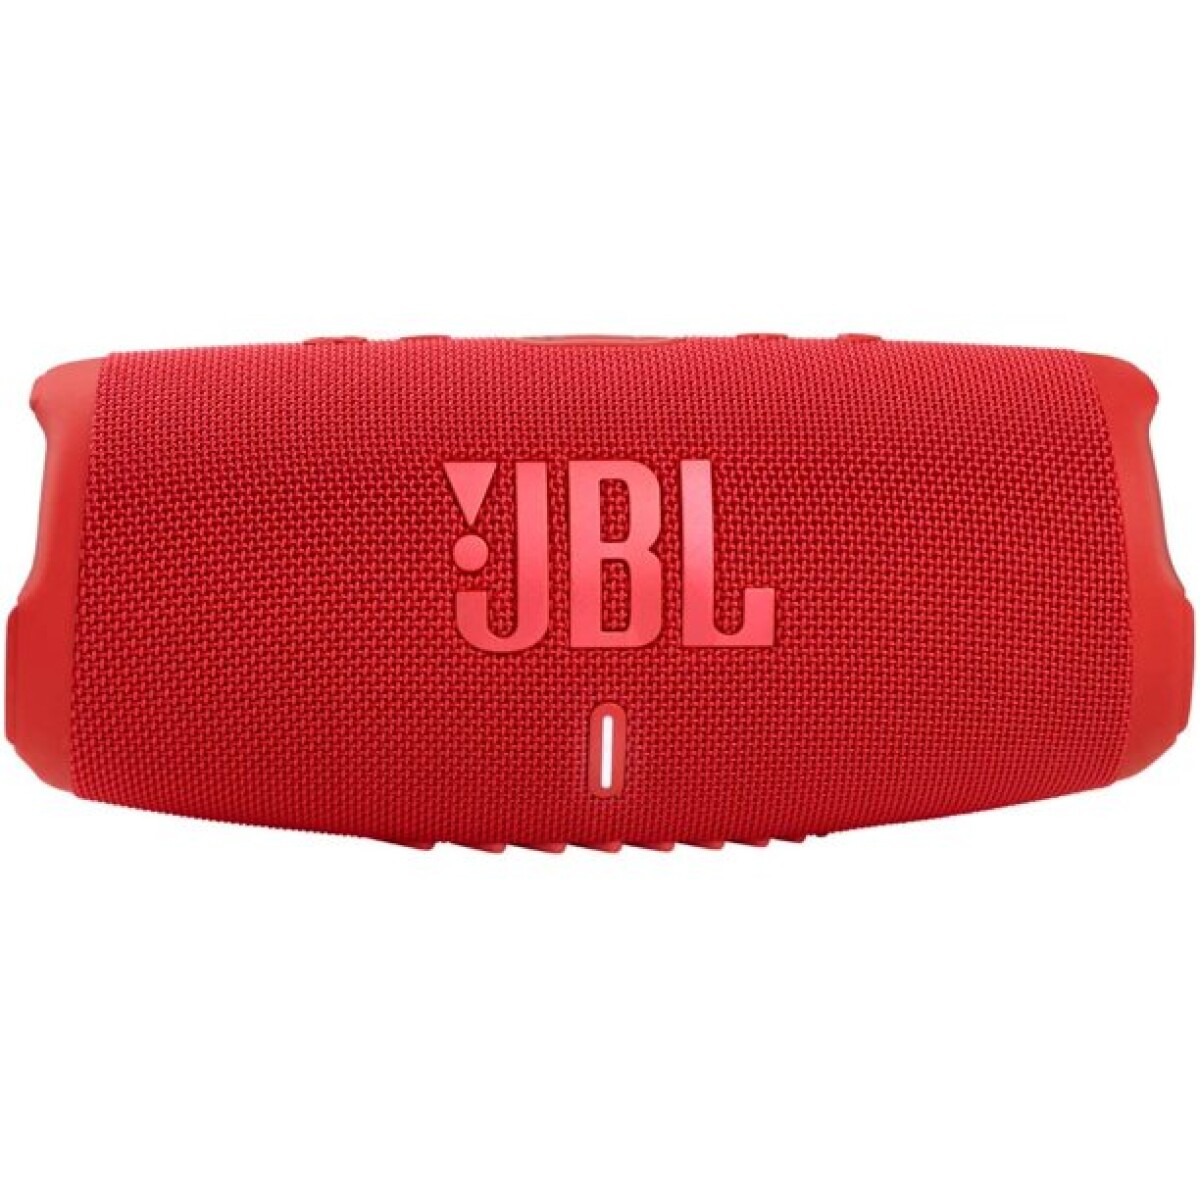 Parlante Jbl Charge 5 Portátil Con Bluetooth Waterproof Red 110v/220v 